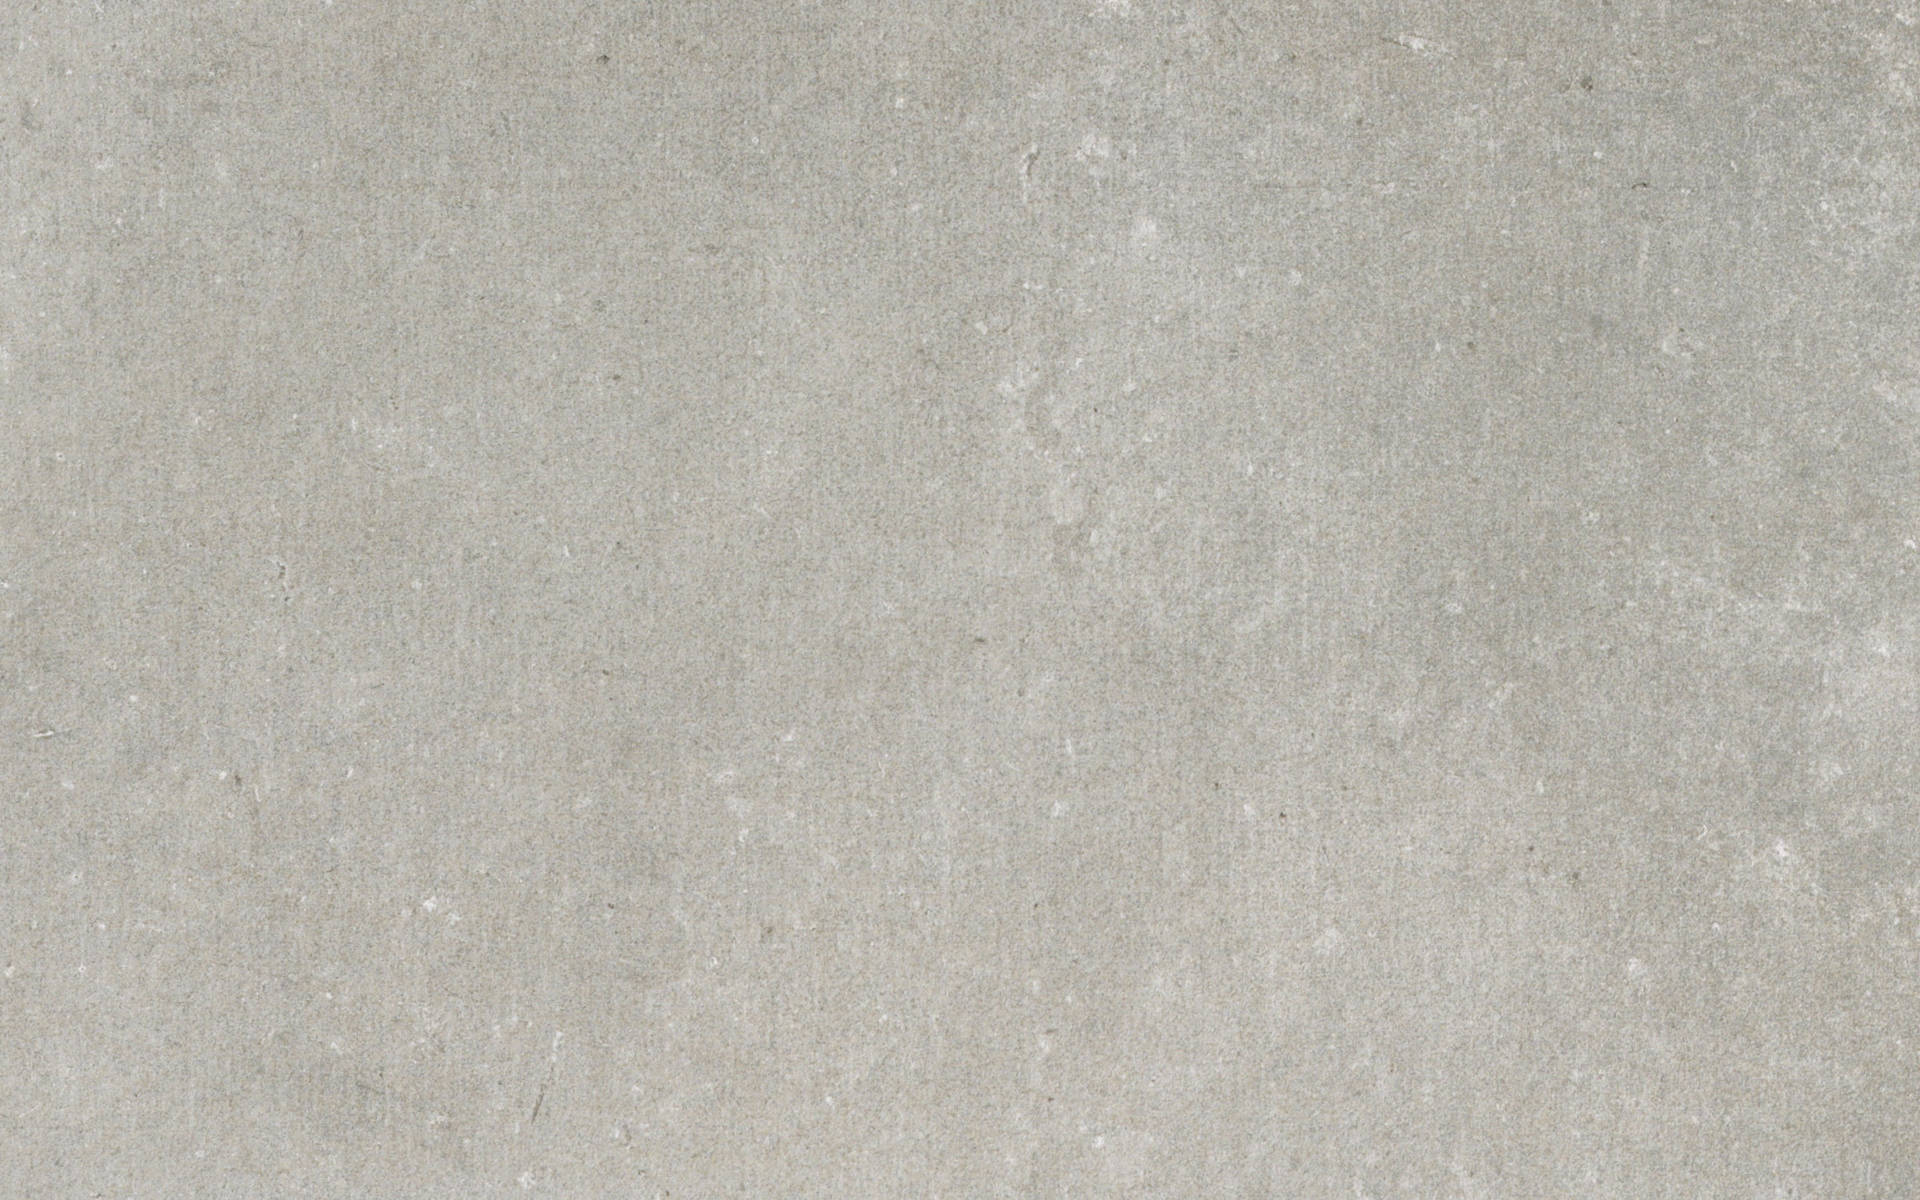 Clean Bare Stone Wall Desktop Wallpaper